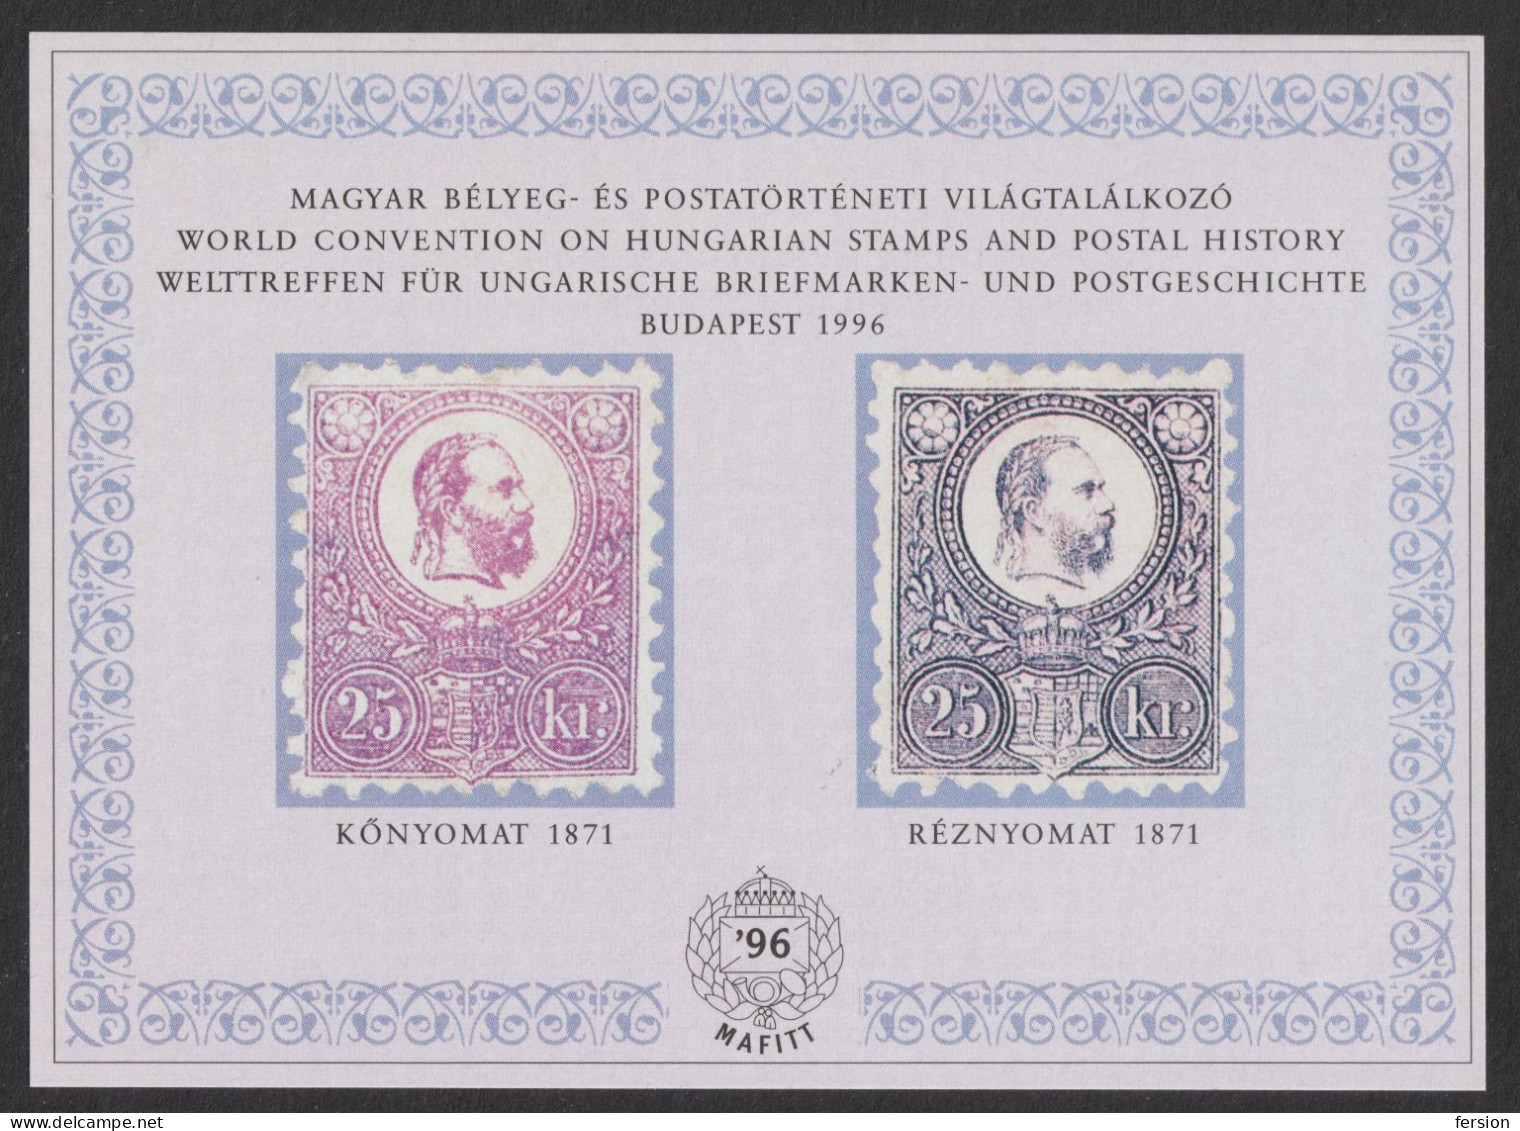 Stamp On Stamp 1871 Reprint Lithography Engraved Commemorative Memorial Sheet MAFITT STAMP 1996 Hungary FRANZ JOSEPH - Foglietto Ricordo